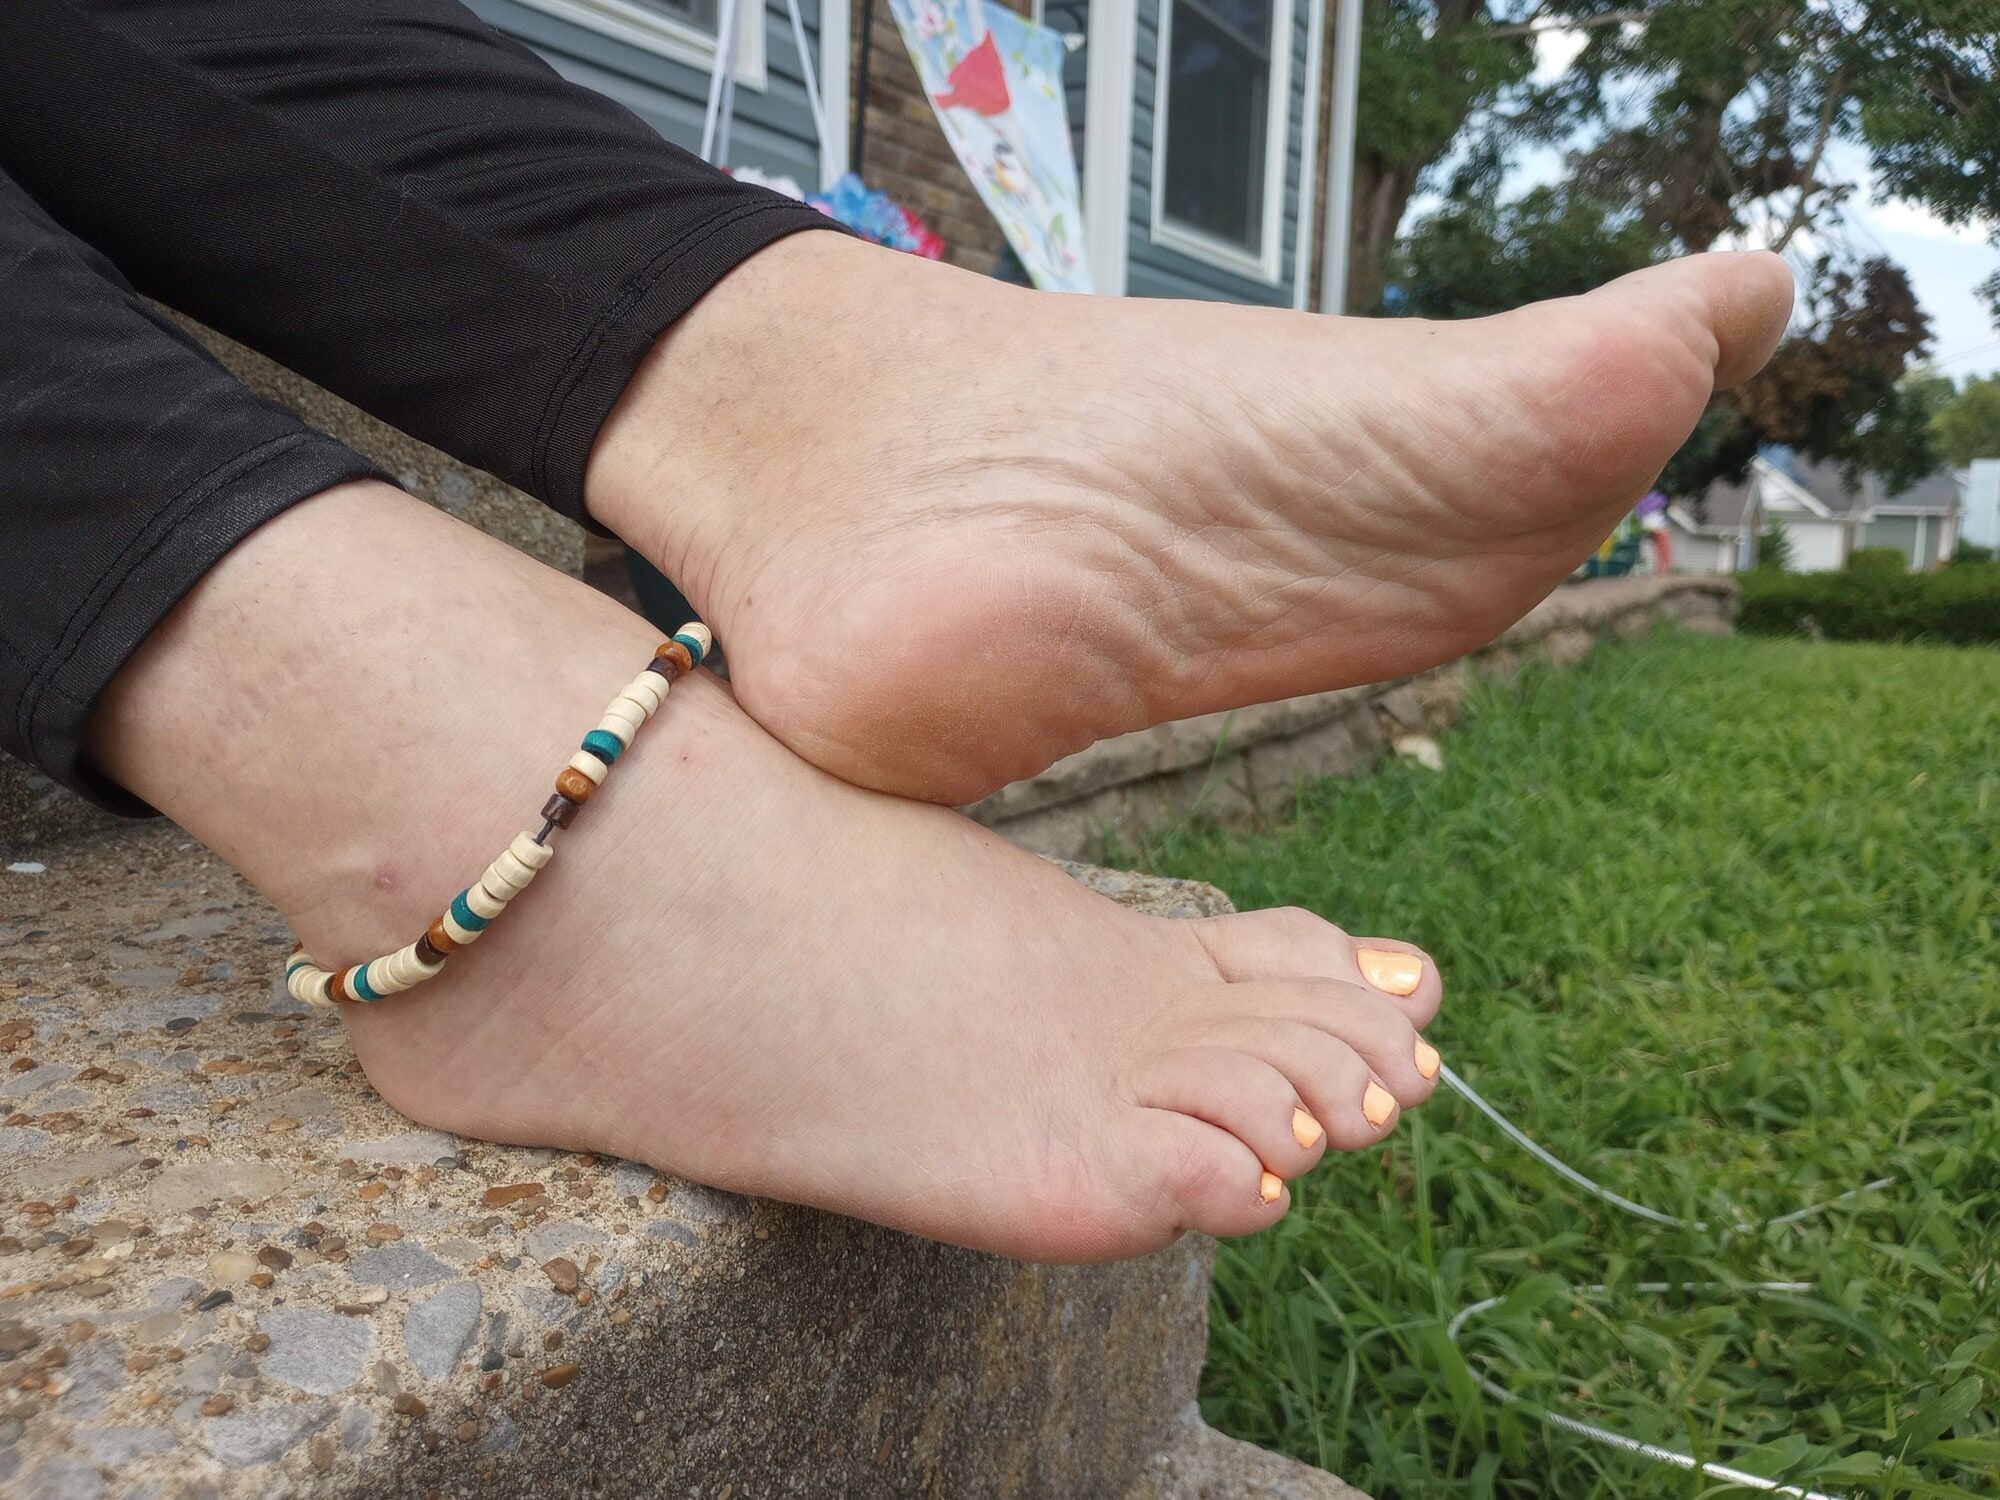 Showing Off Her Anklet 2 #13